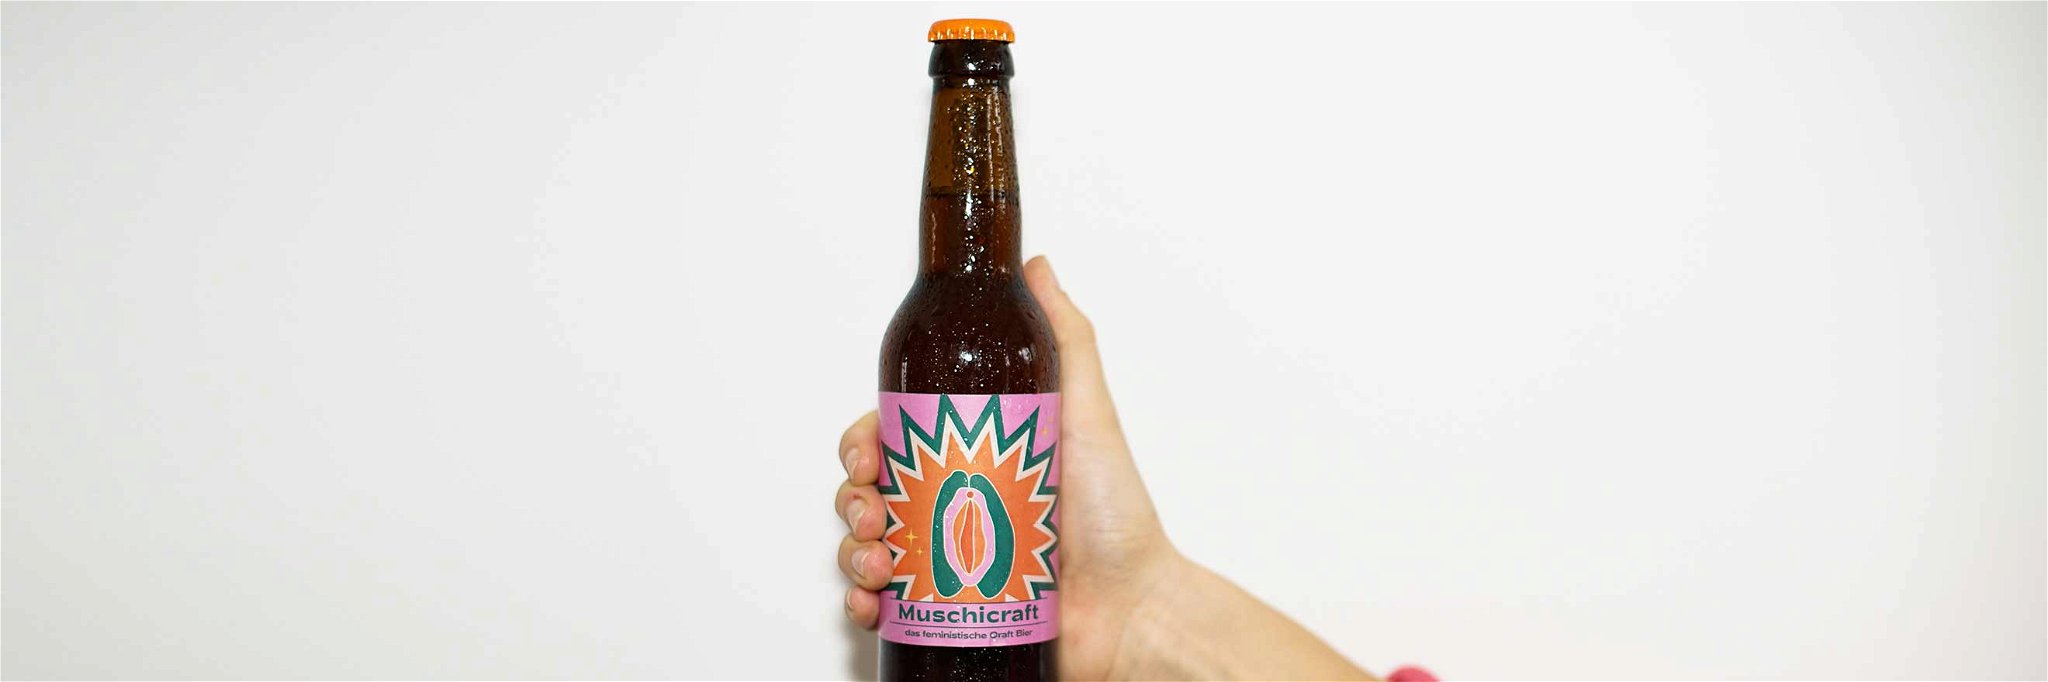 The feminist beer is called Muschicraft.